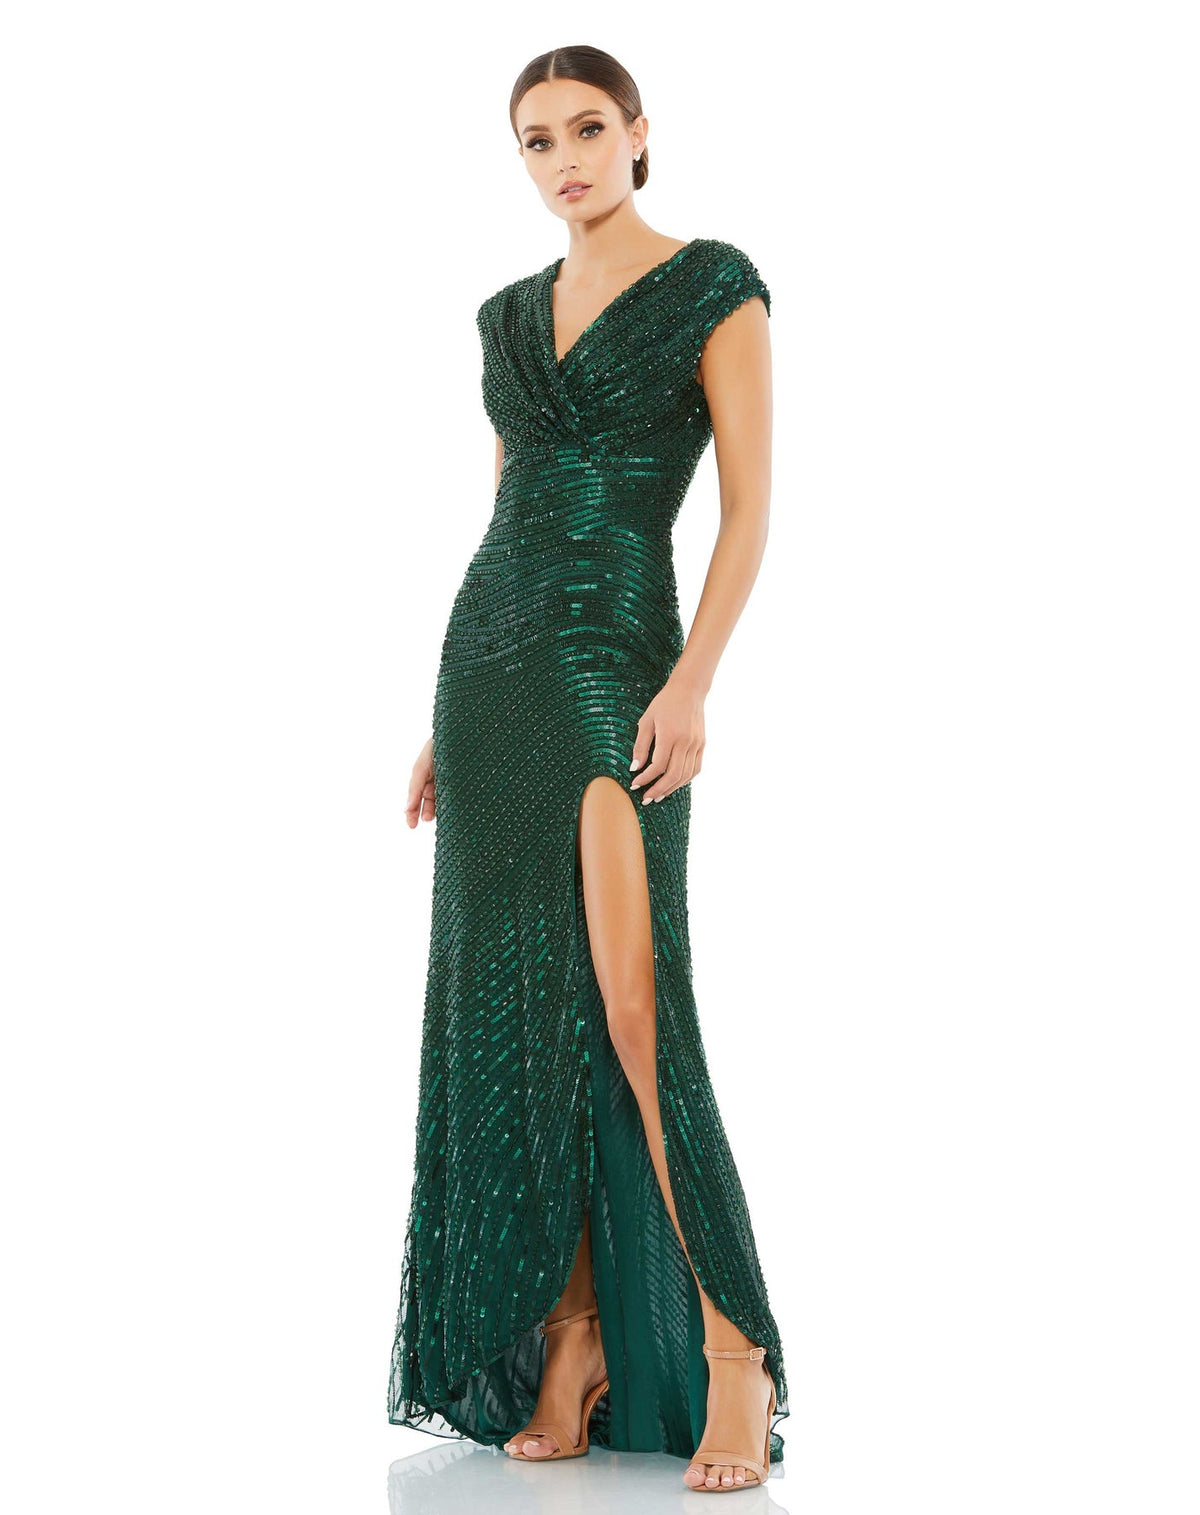 Cap sleeve evening Gown - Emerald